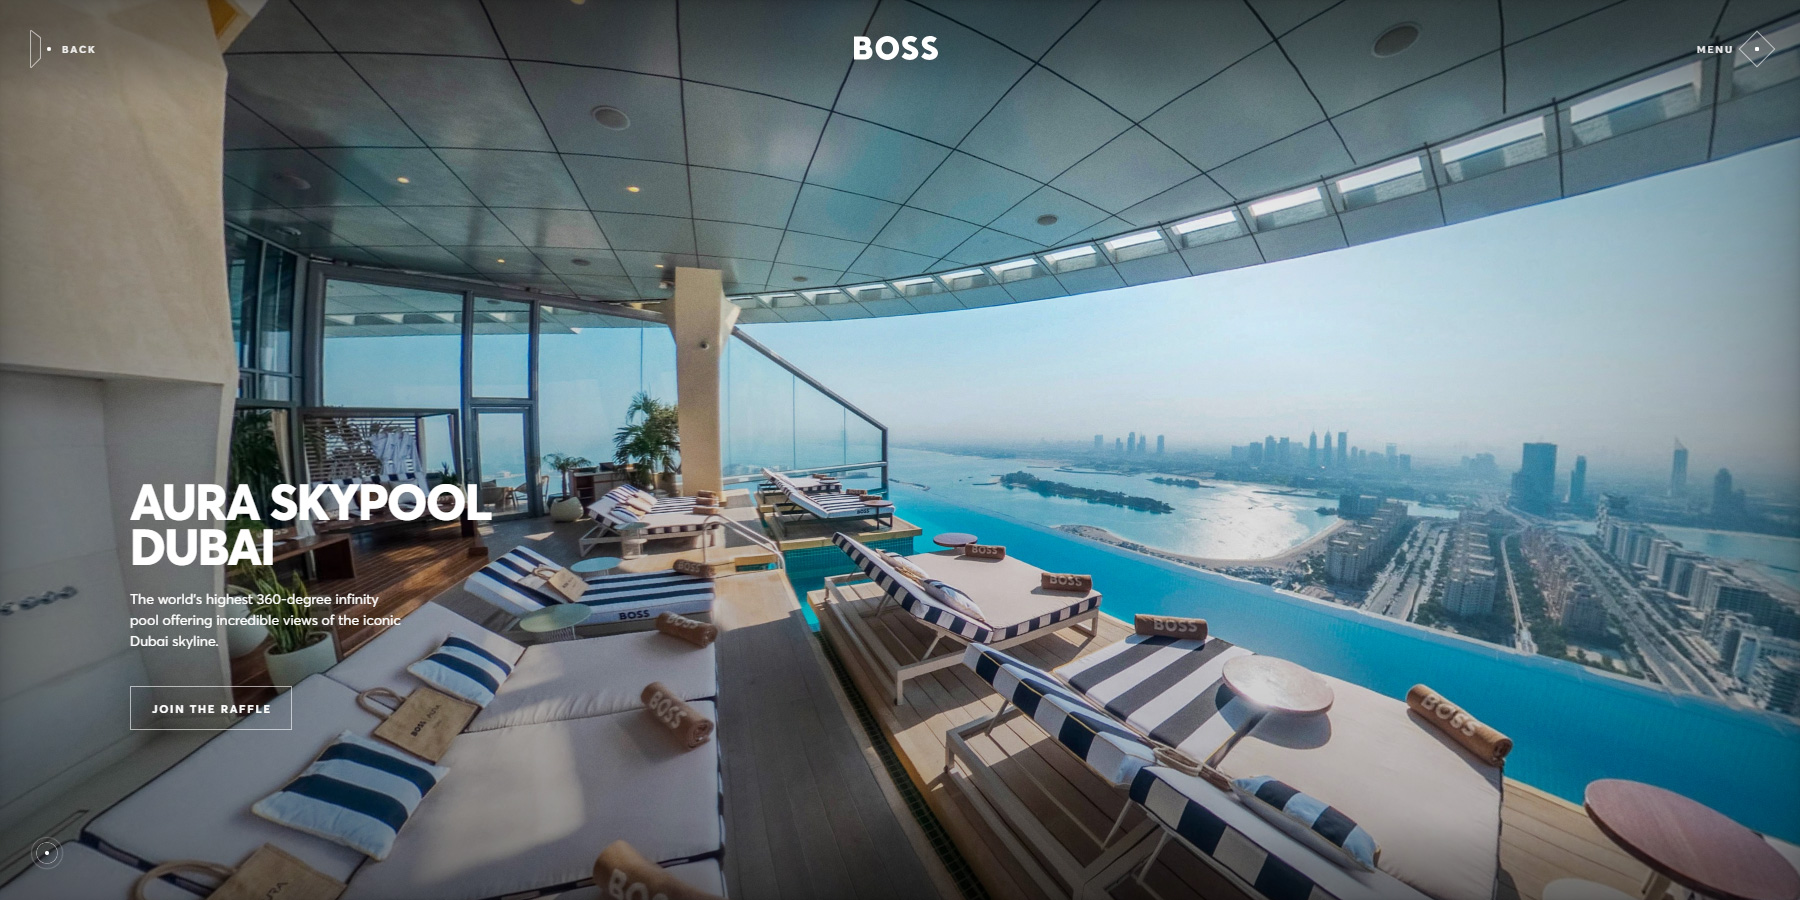 BOSS Dubai Experience - Website of the Day